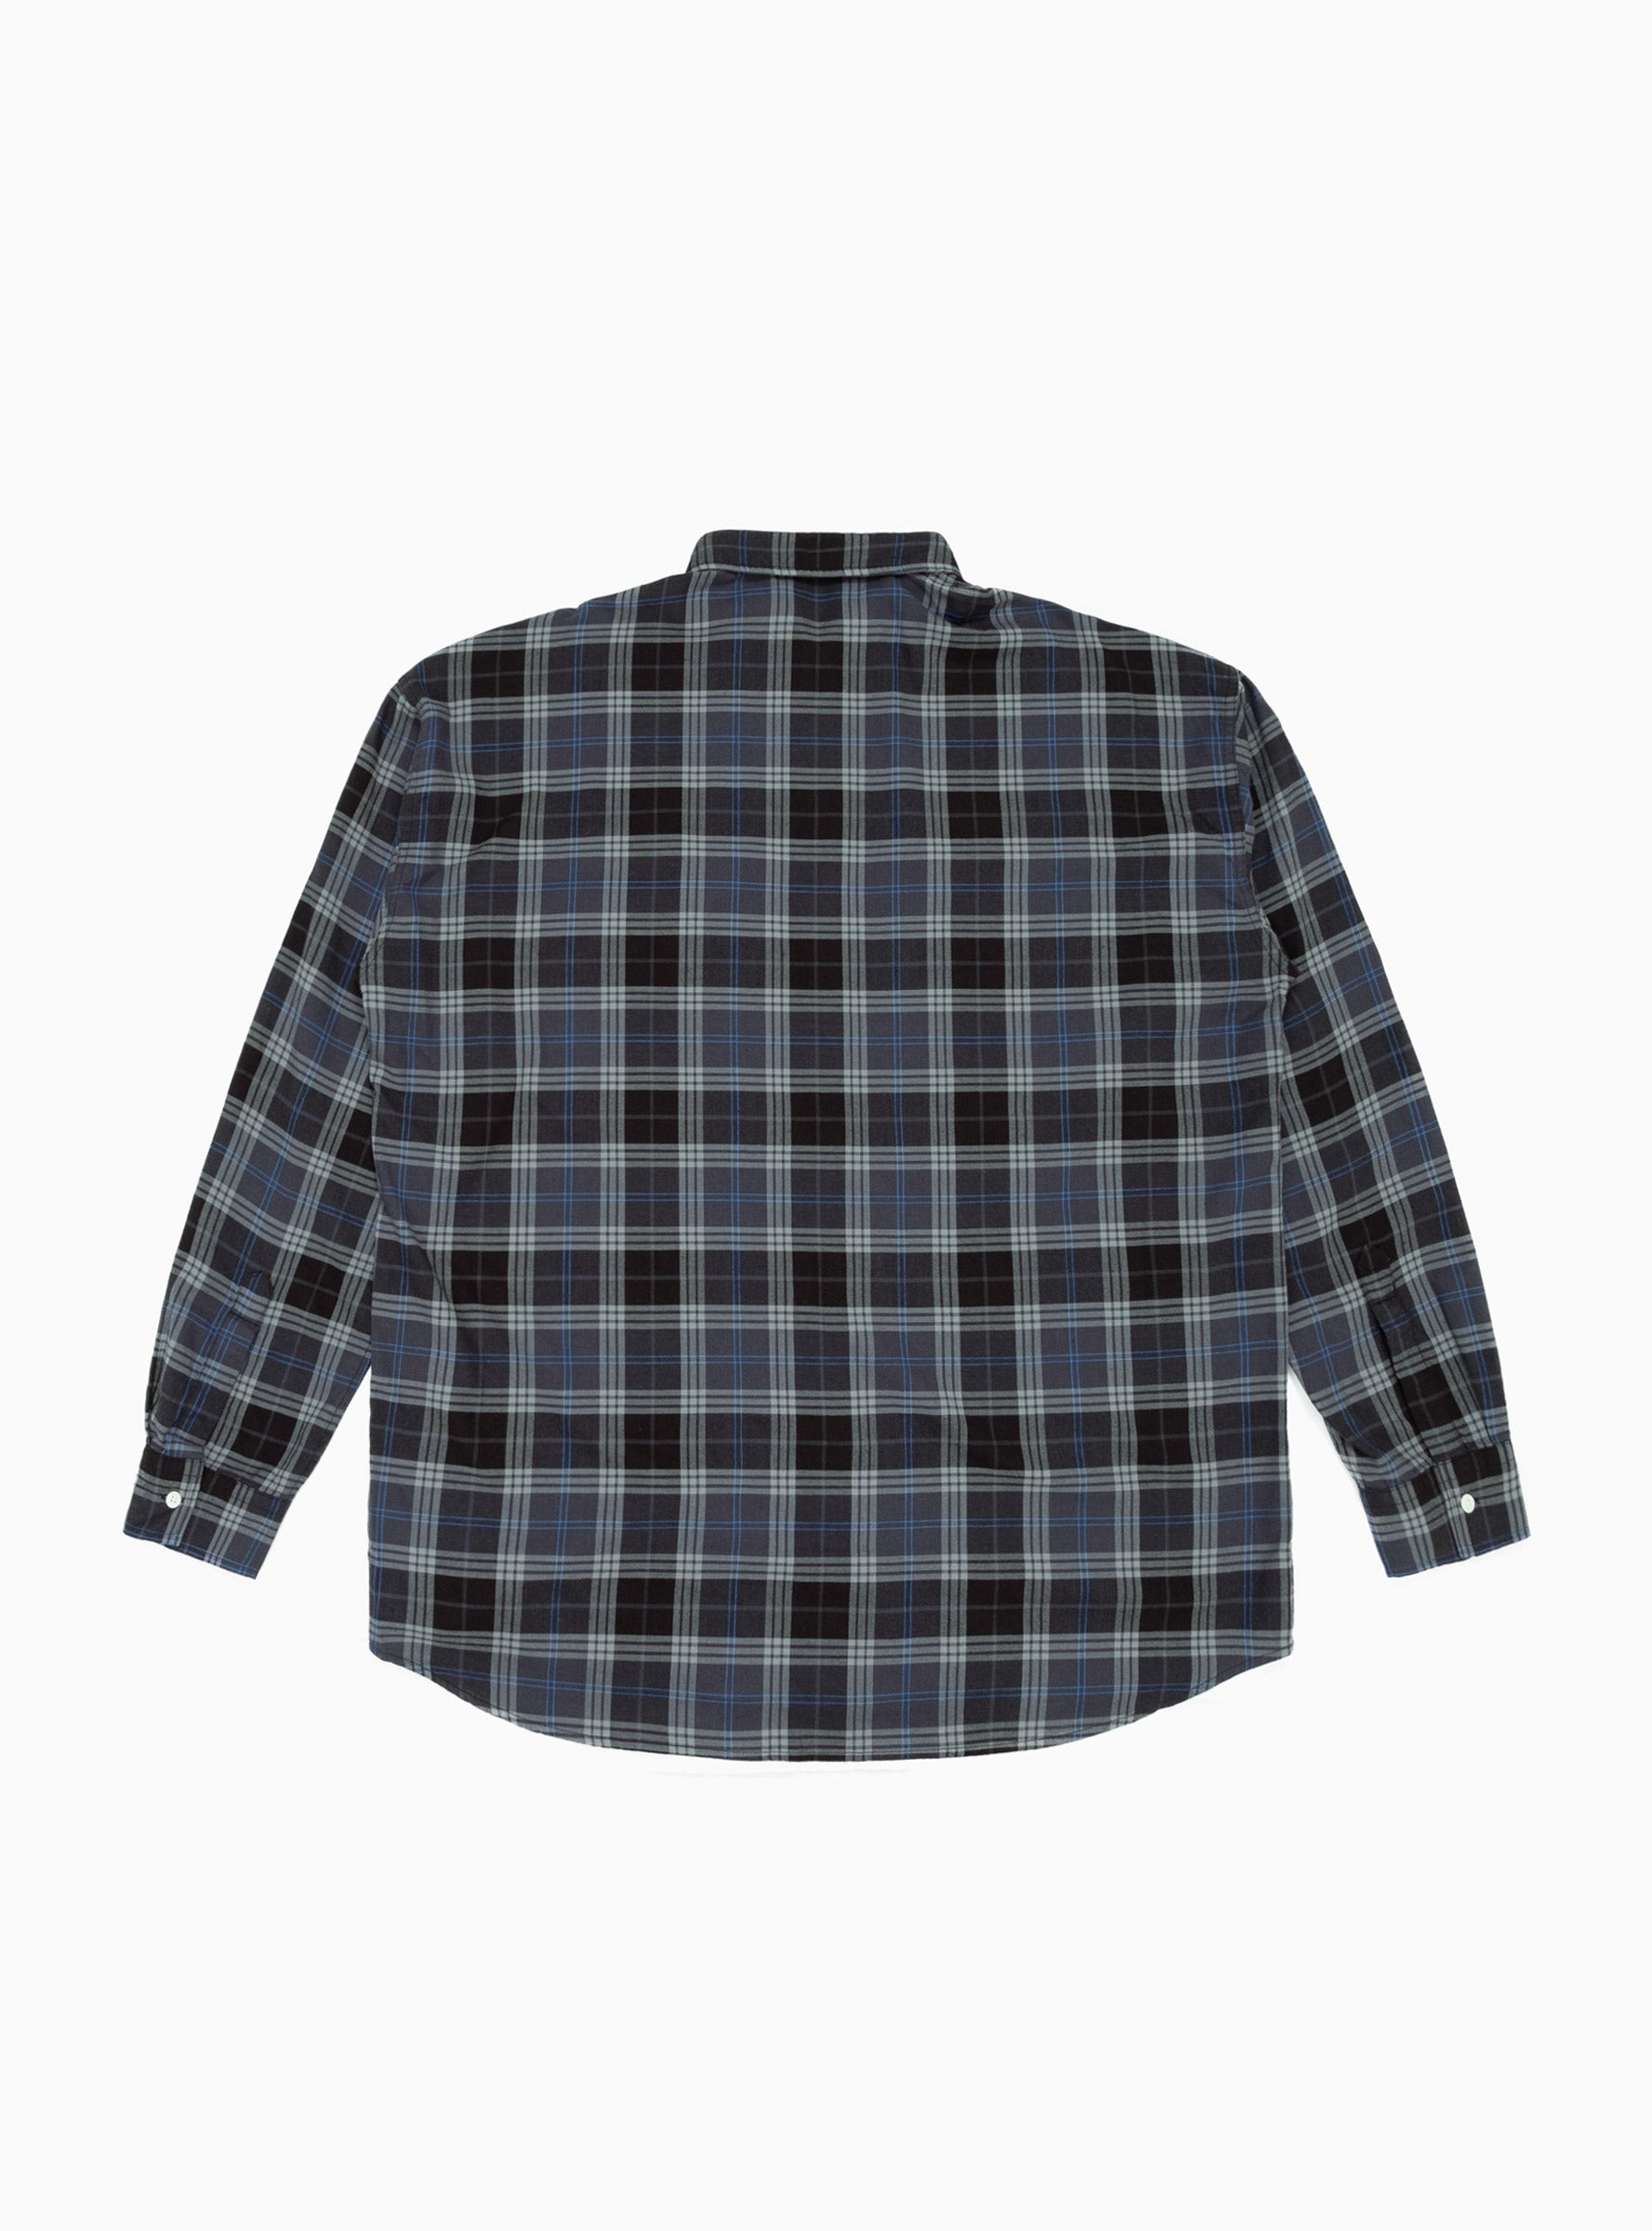 Flannel Shirt Grey Check